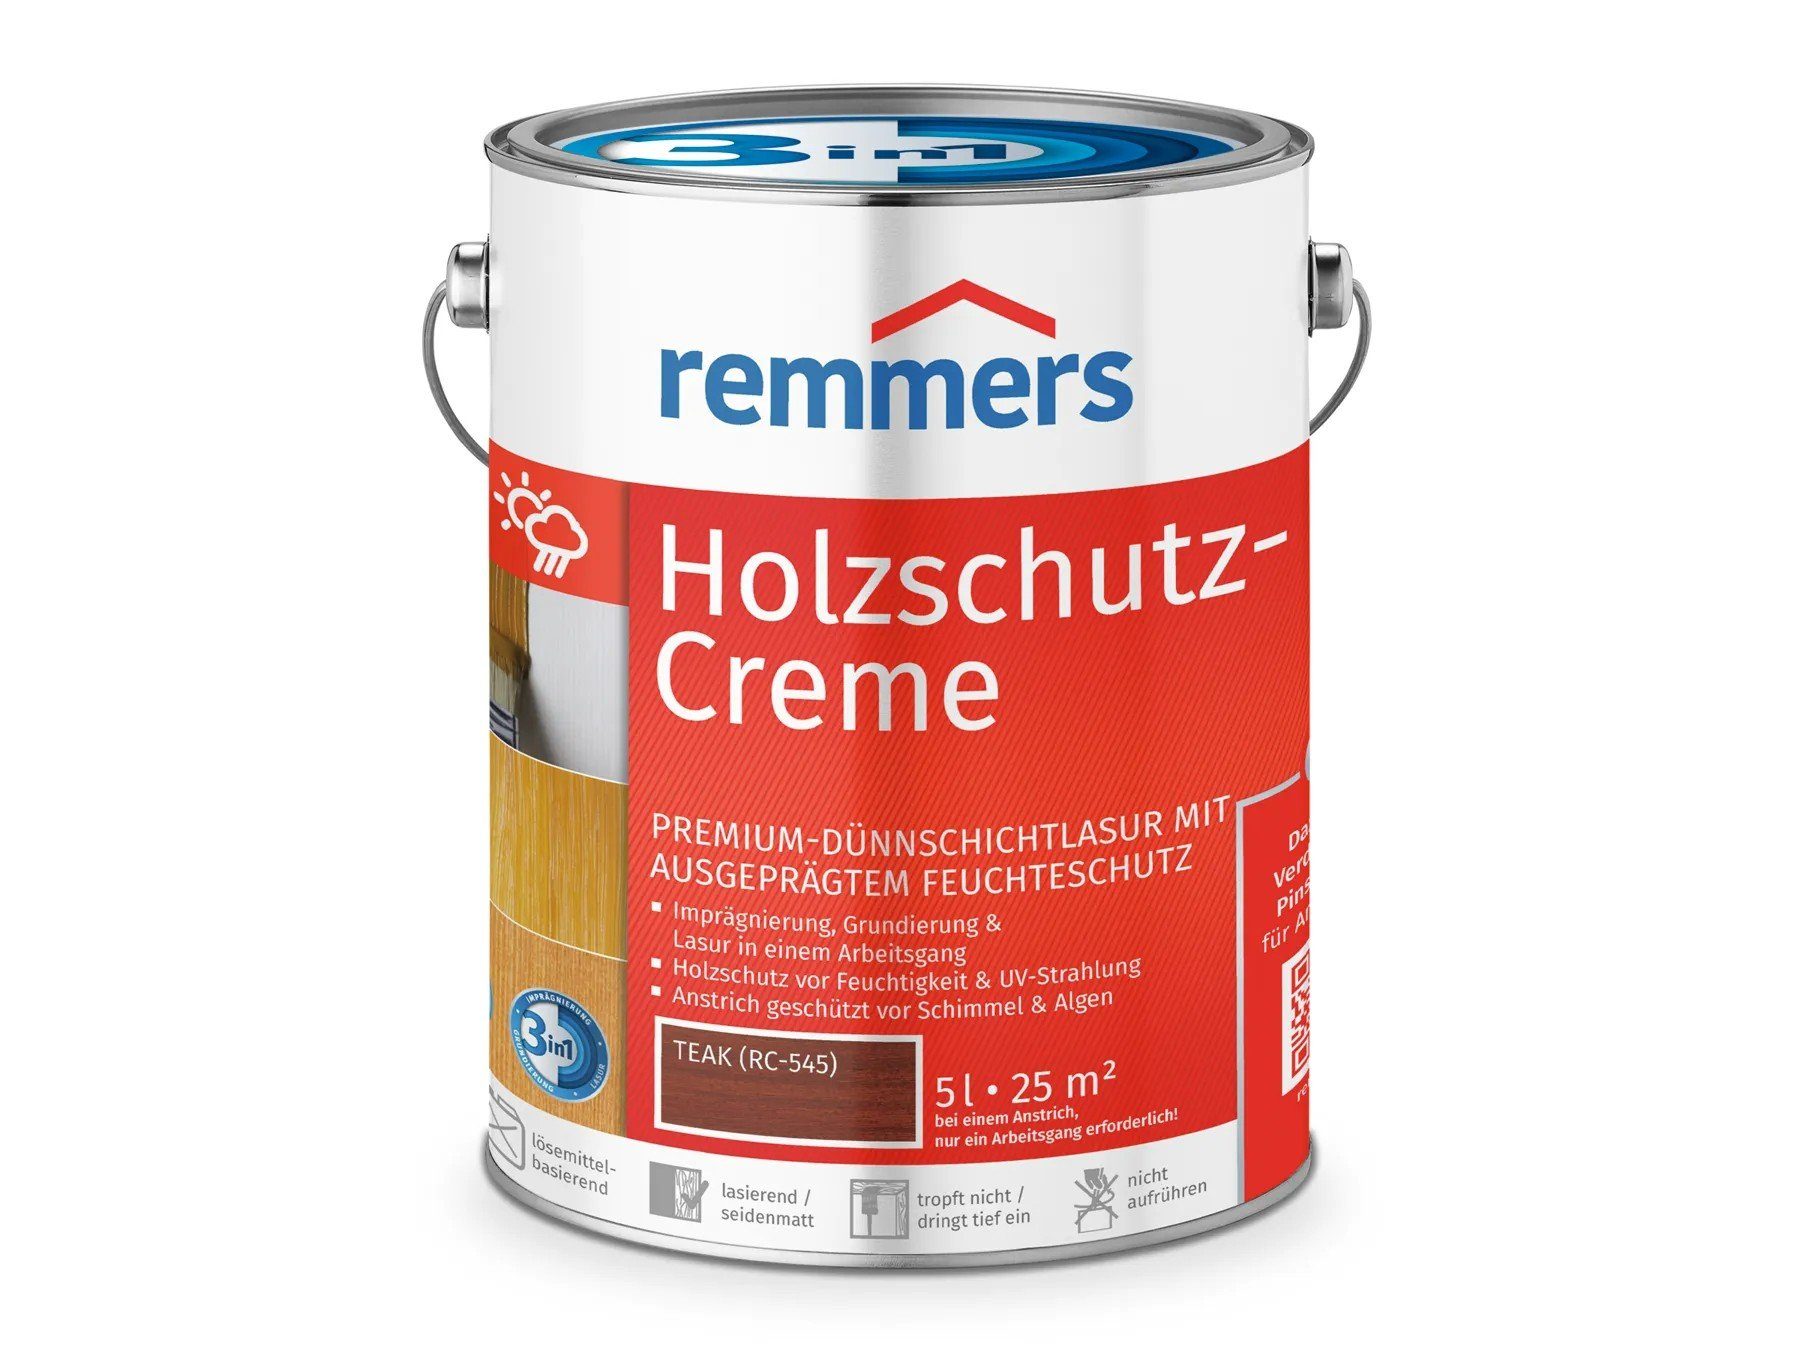 3in1 Remmers Holzschutz-Creme teak Holzschutzlasur (RC-545)